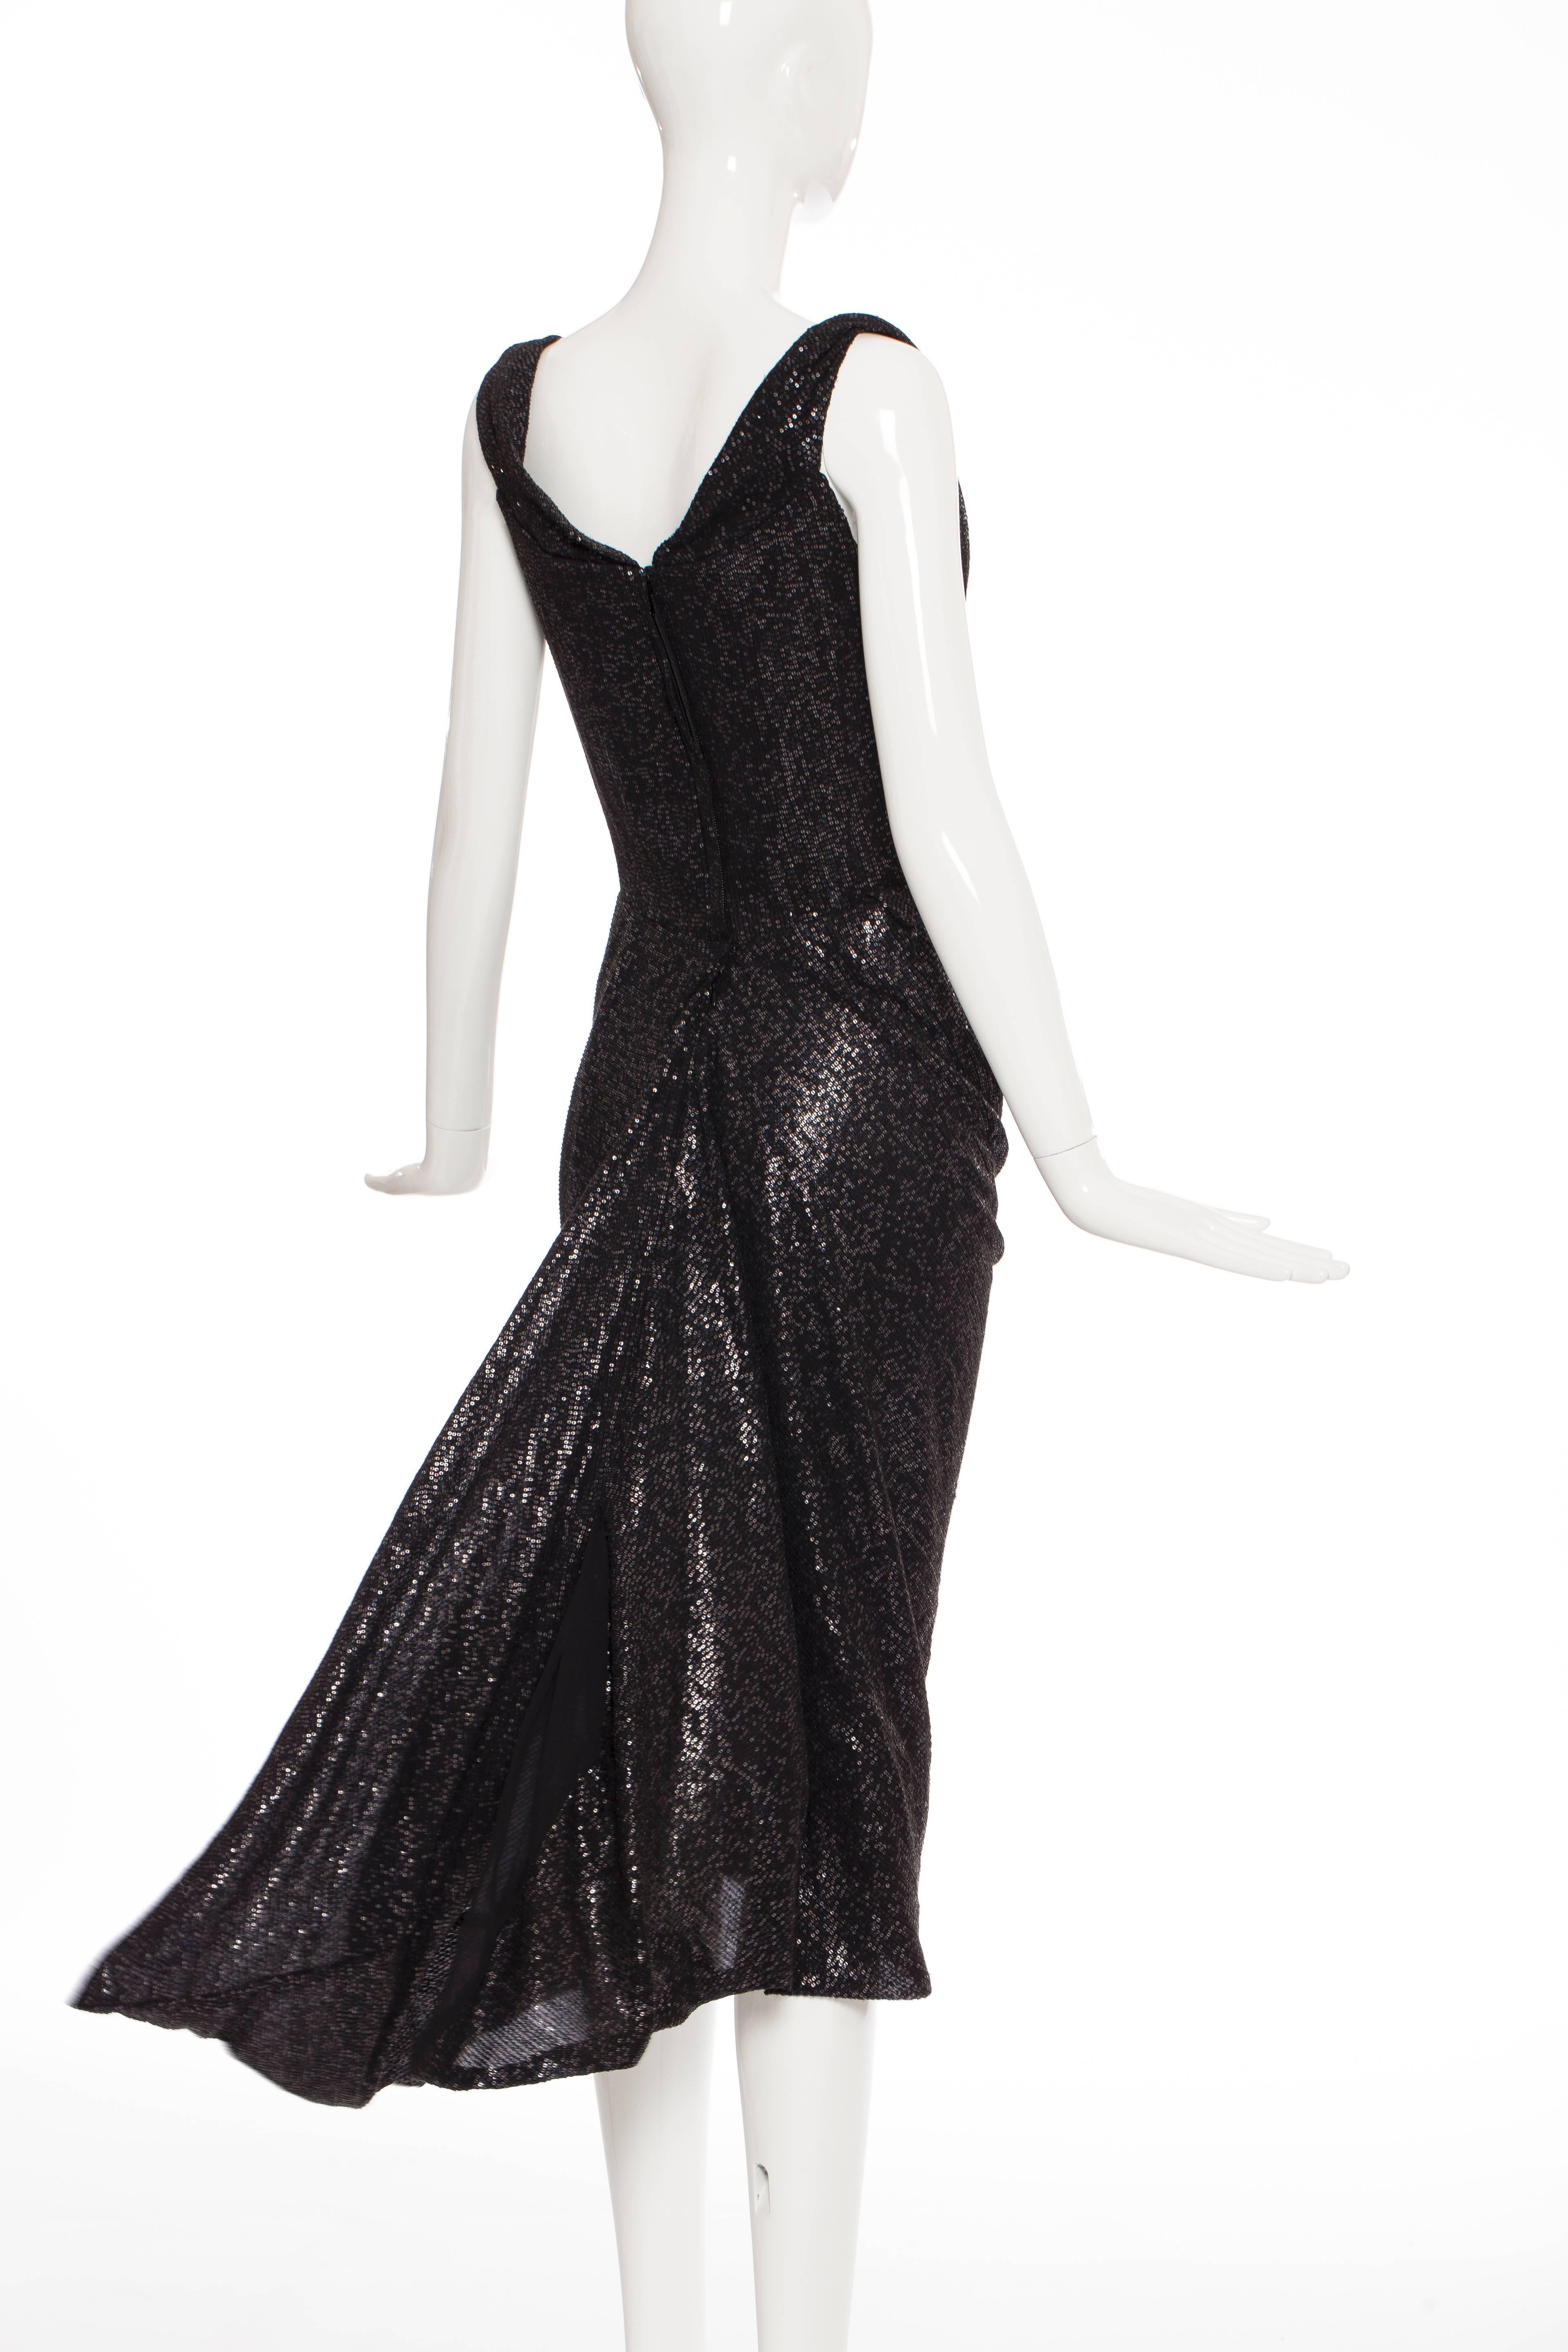 Vivienne Westwood Gold Label Black Sequined Evening Dress, Autumn - Winter 2011 1